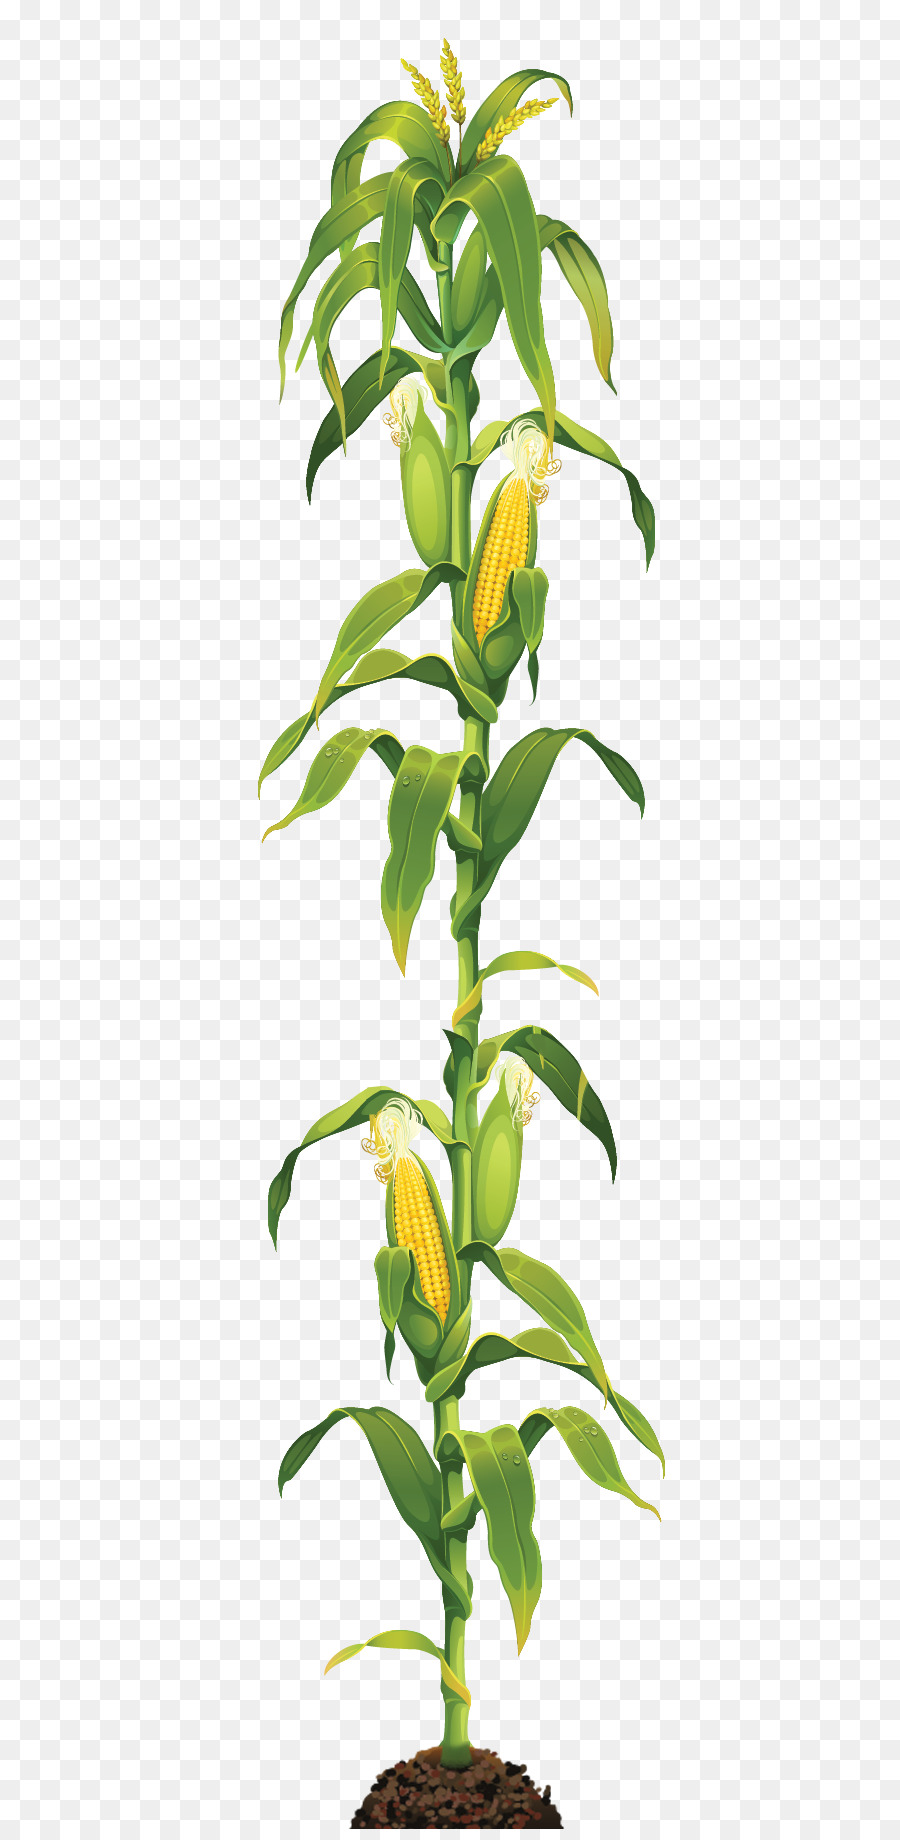 Corn on the cob Maize Caramel corn Clip art - maize plant png download - 462*1829 - Free Transparent Corn On The Cob png Download.